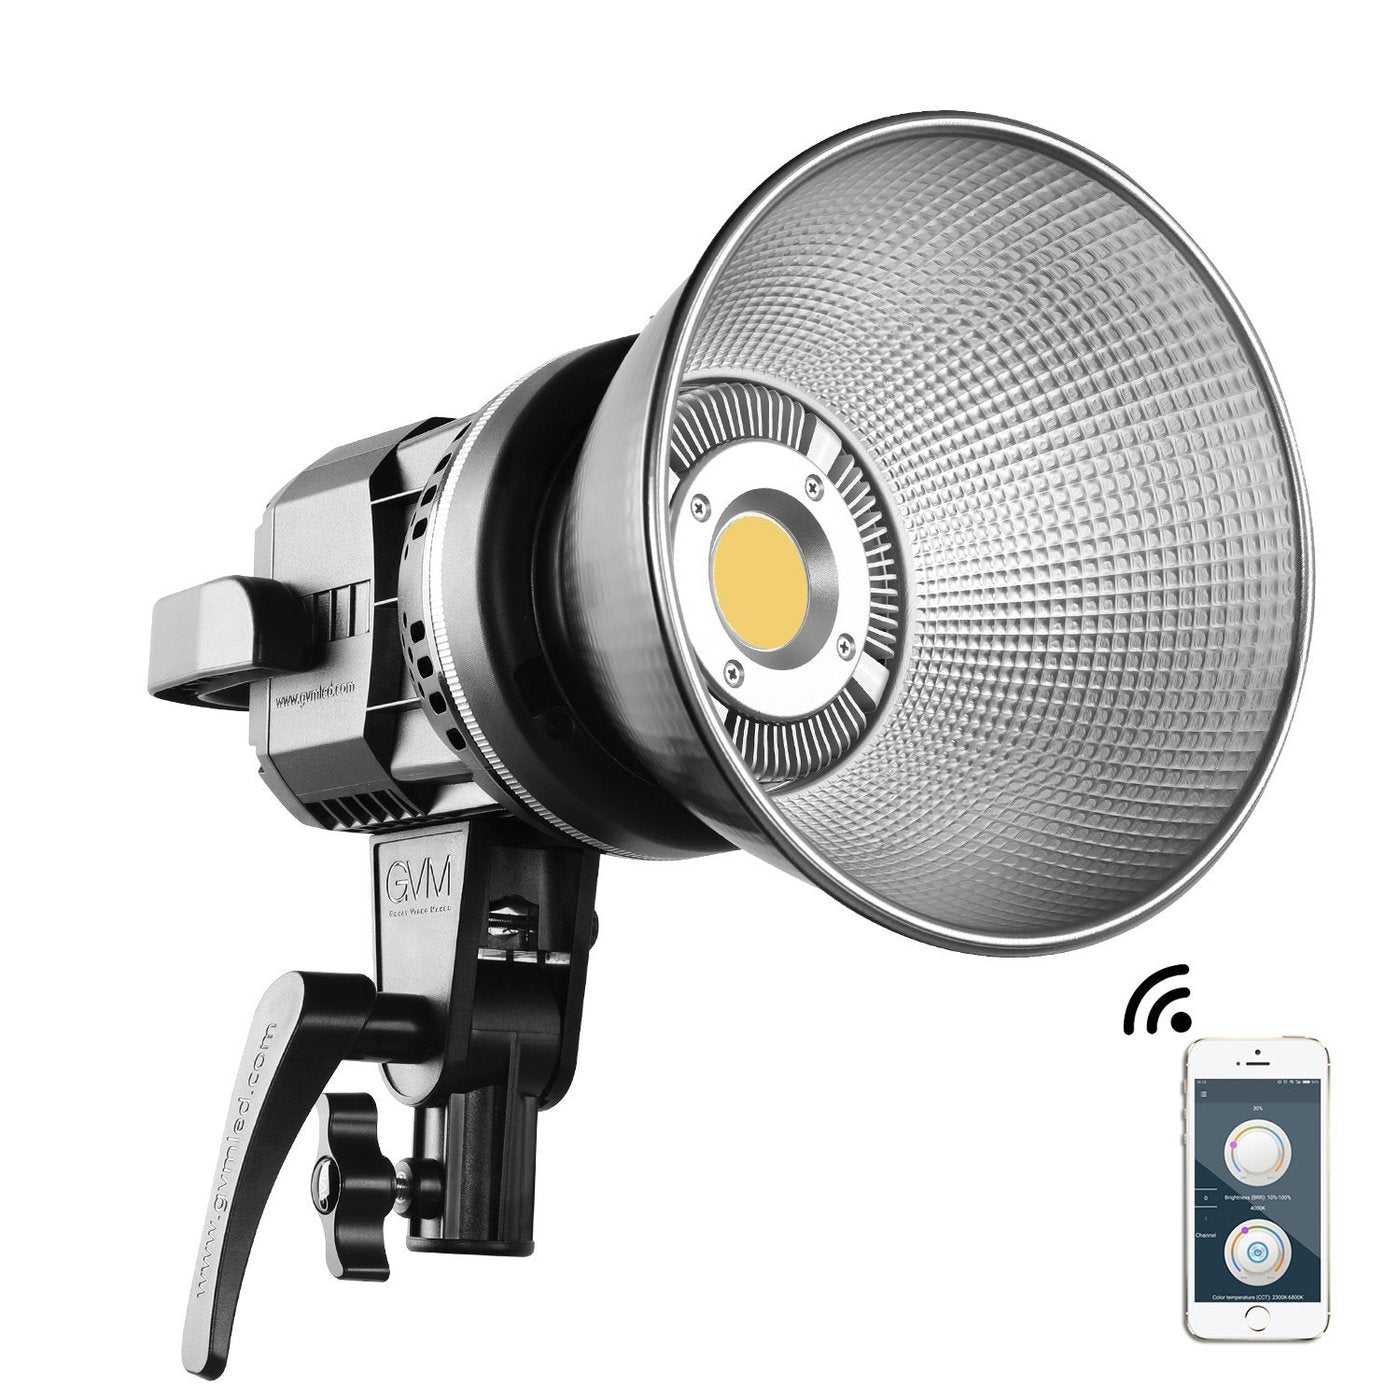 GVM LED Video Light (Daylight-Balanced) P80S-II LED Light